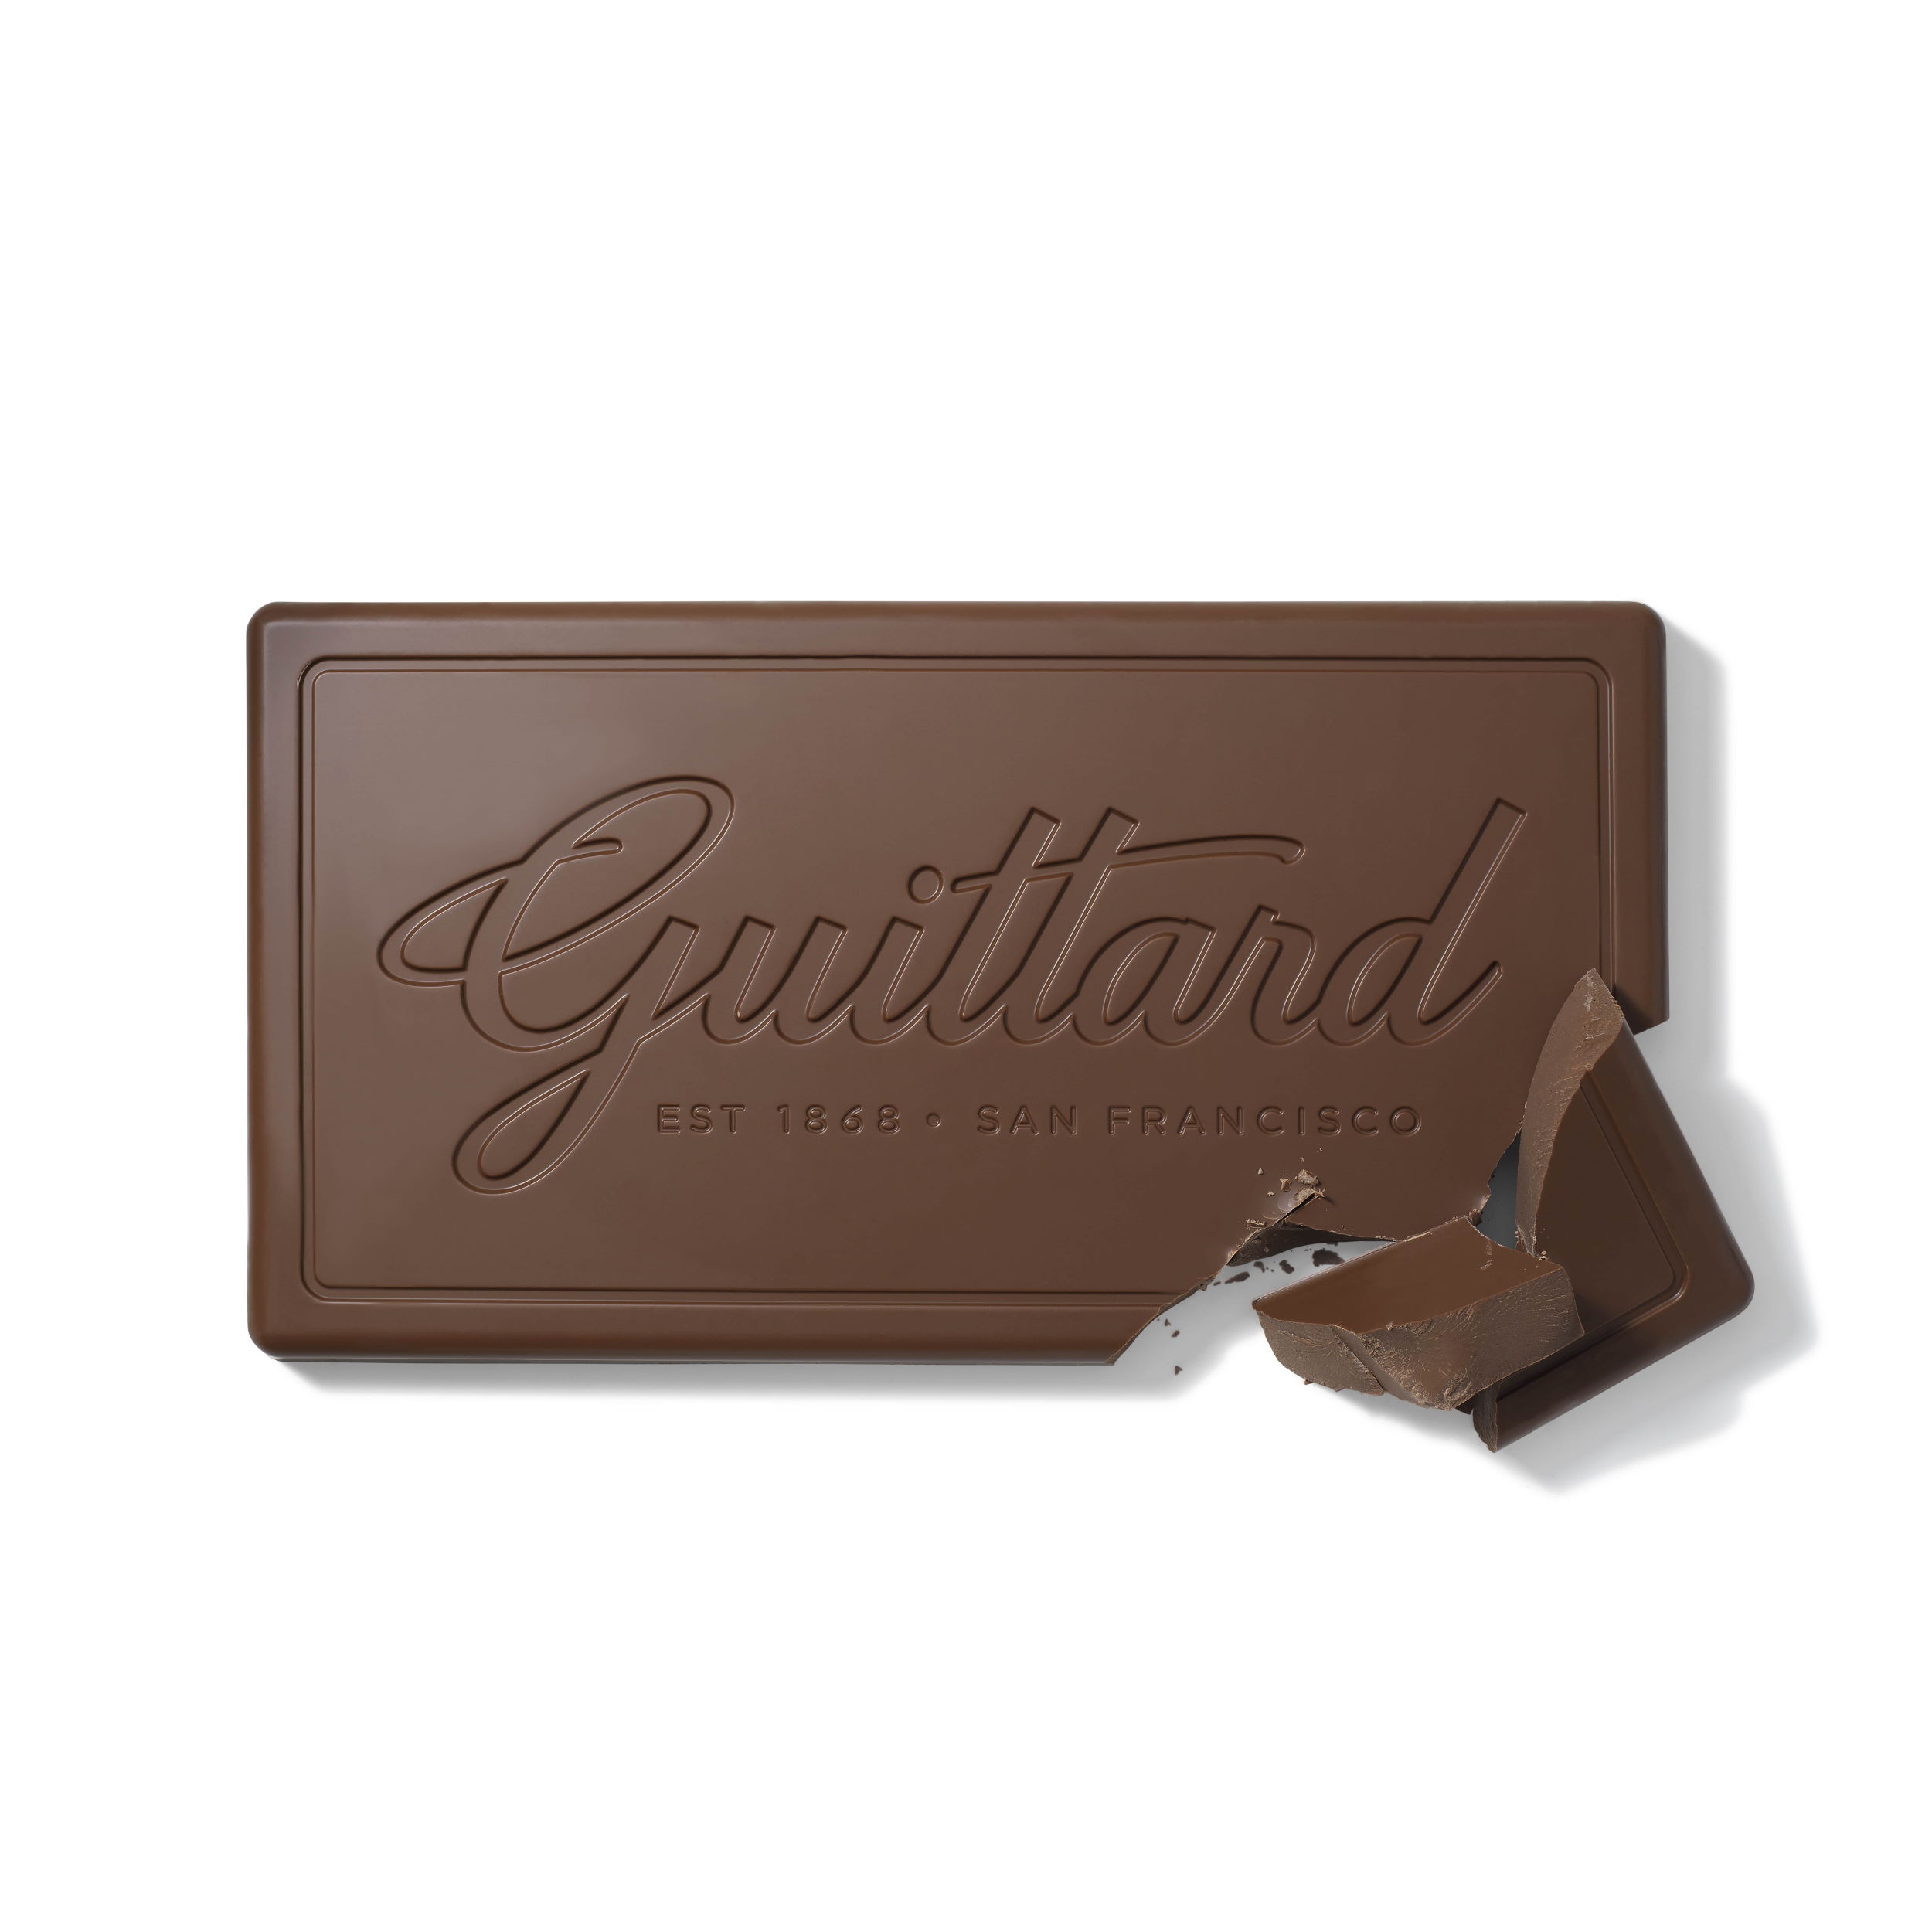 Guittard Ramona 45% Dark Couverture Chocolate Block